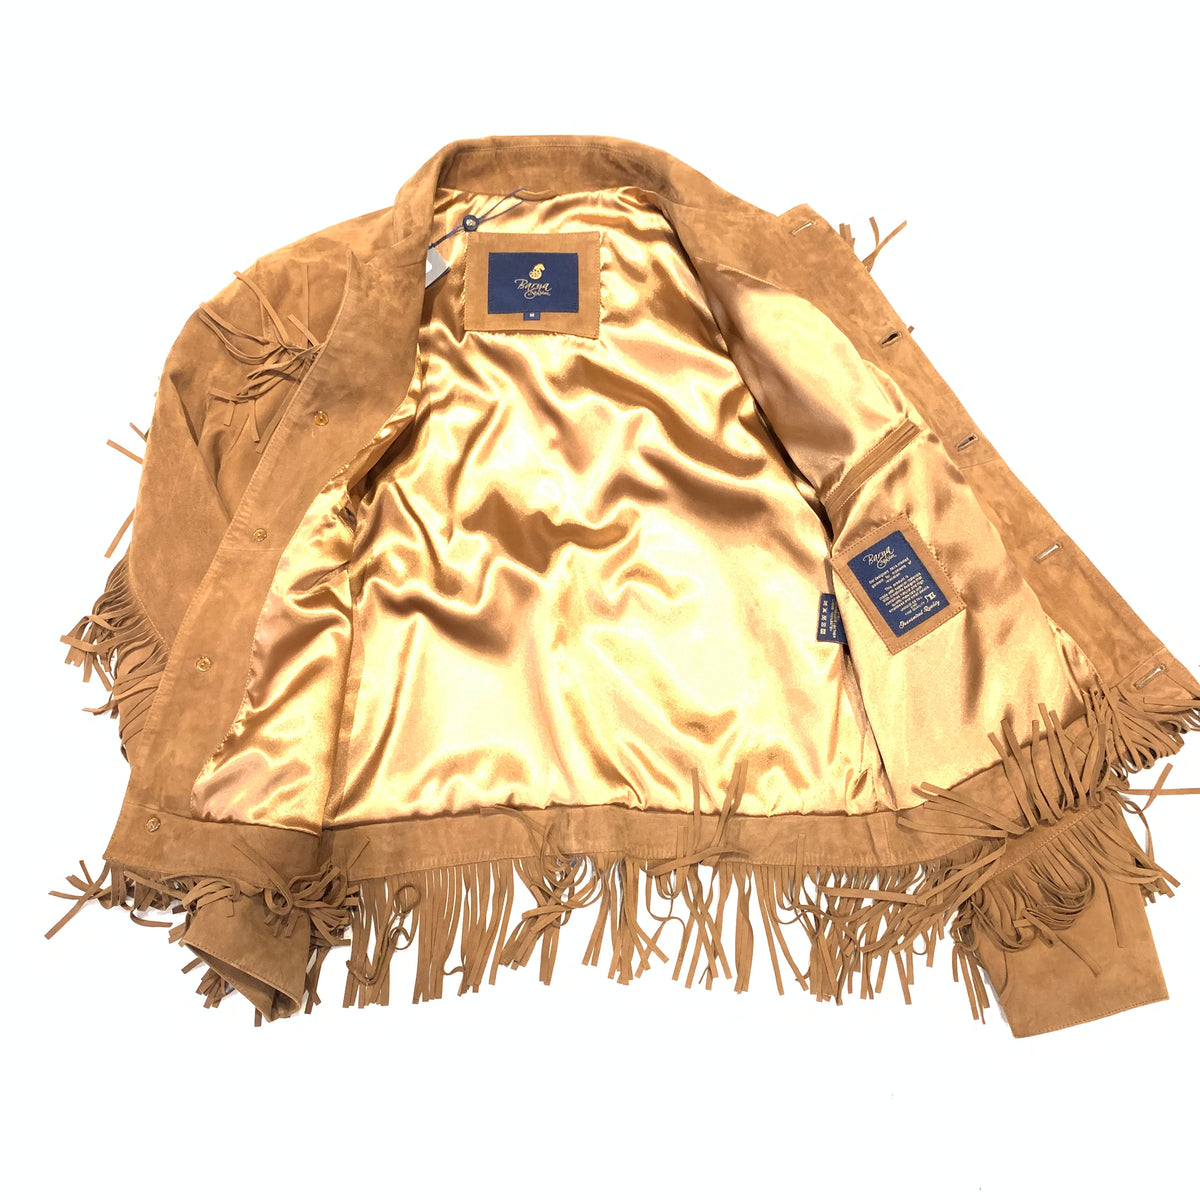 Barya NewYork Men's Suede Fringe Tassel Western Jacket - Dudes Boutique